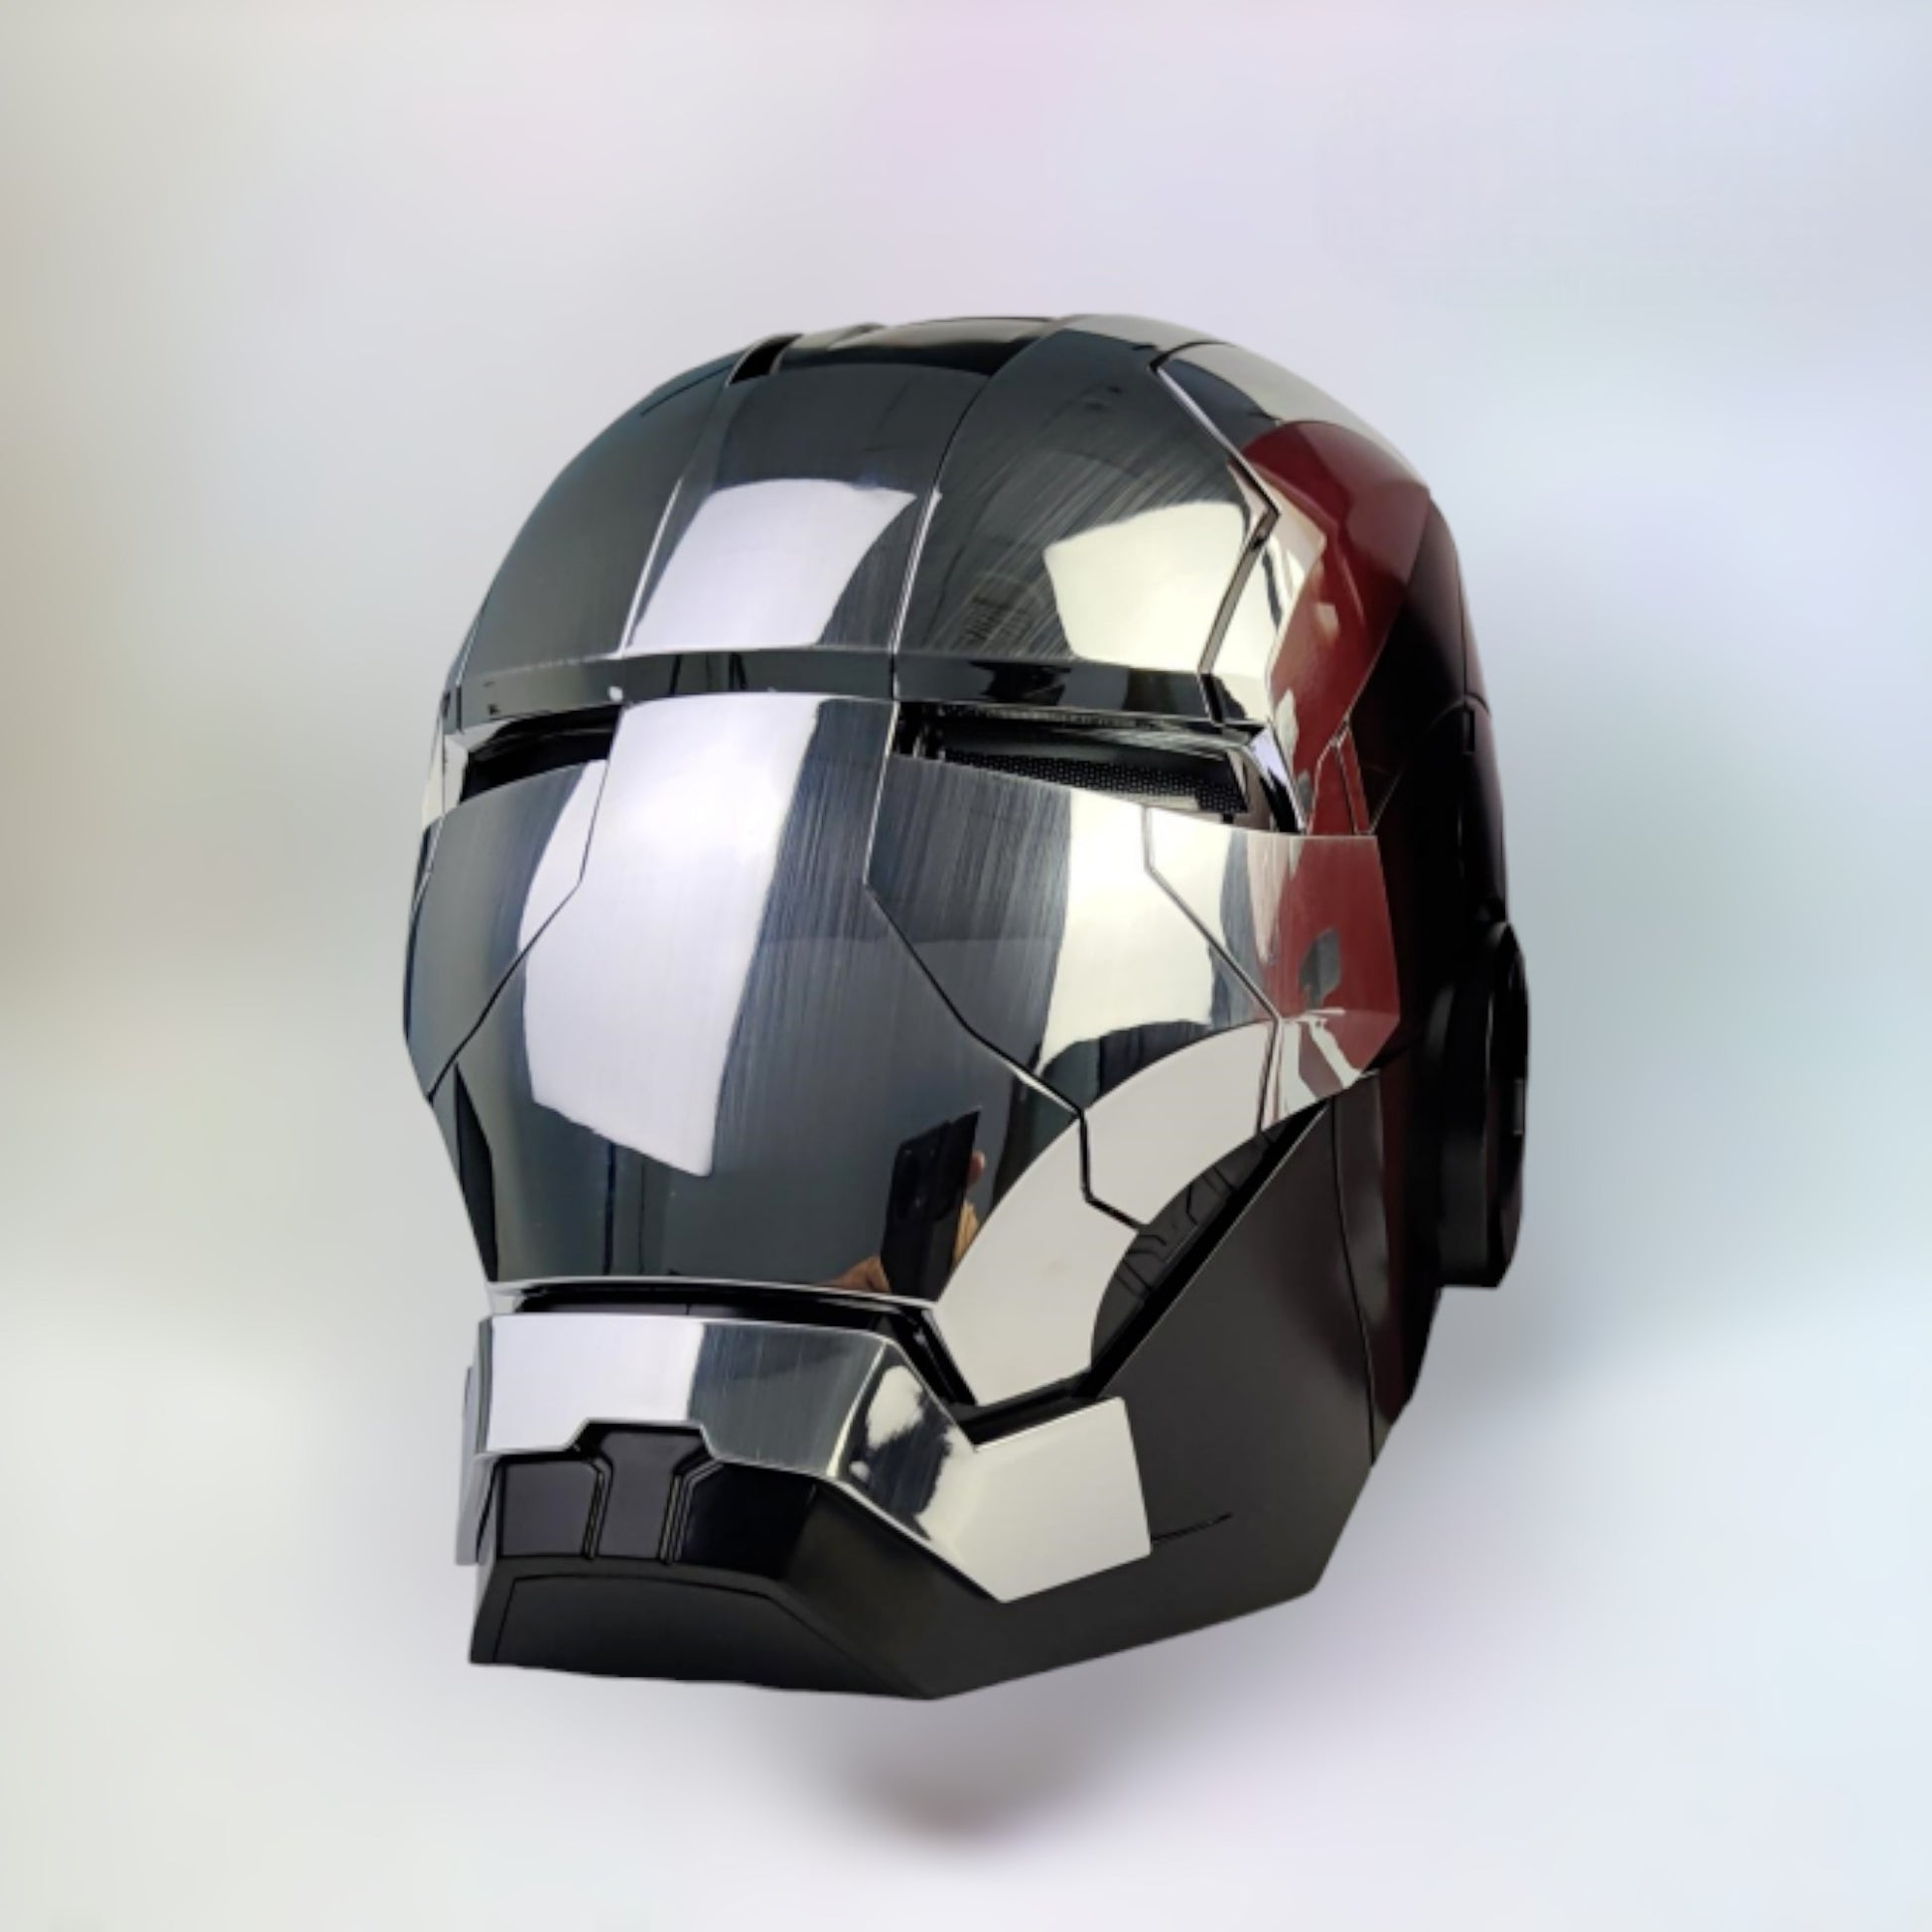 Iron Man Helmet MK5 Black War Machine Edition With Jarvis Voice Activation on plain white background.